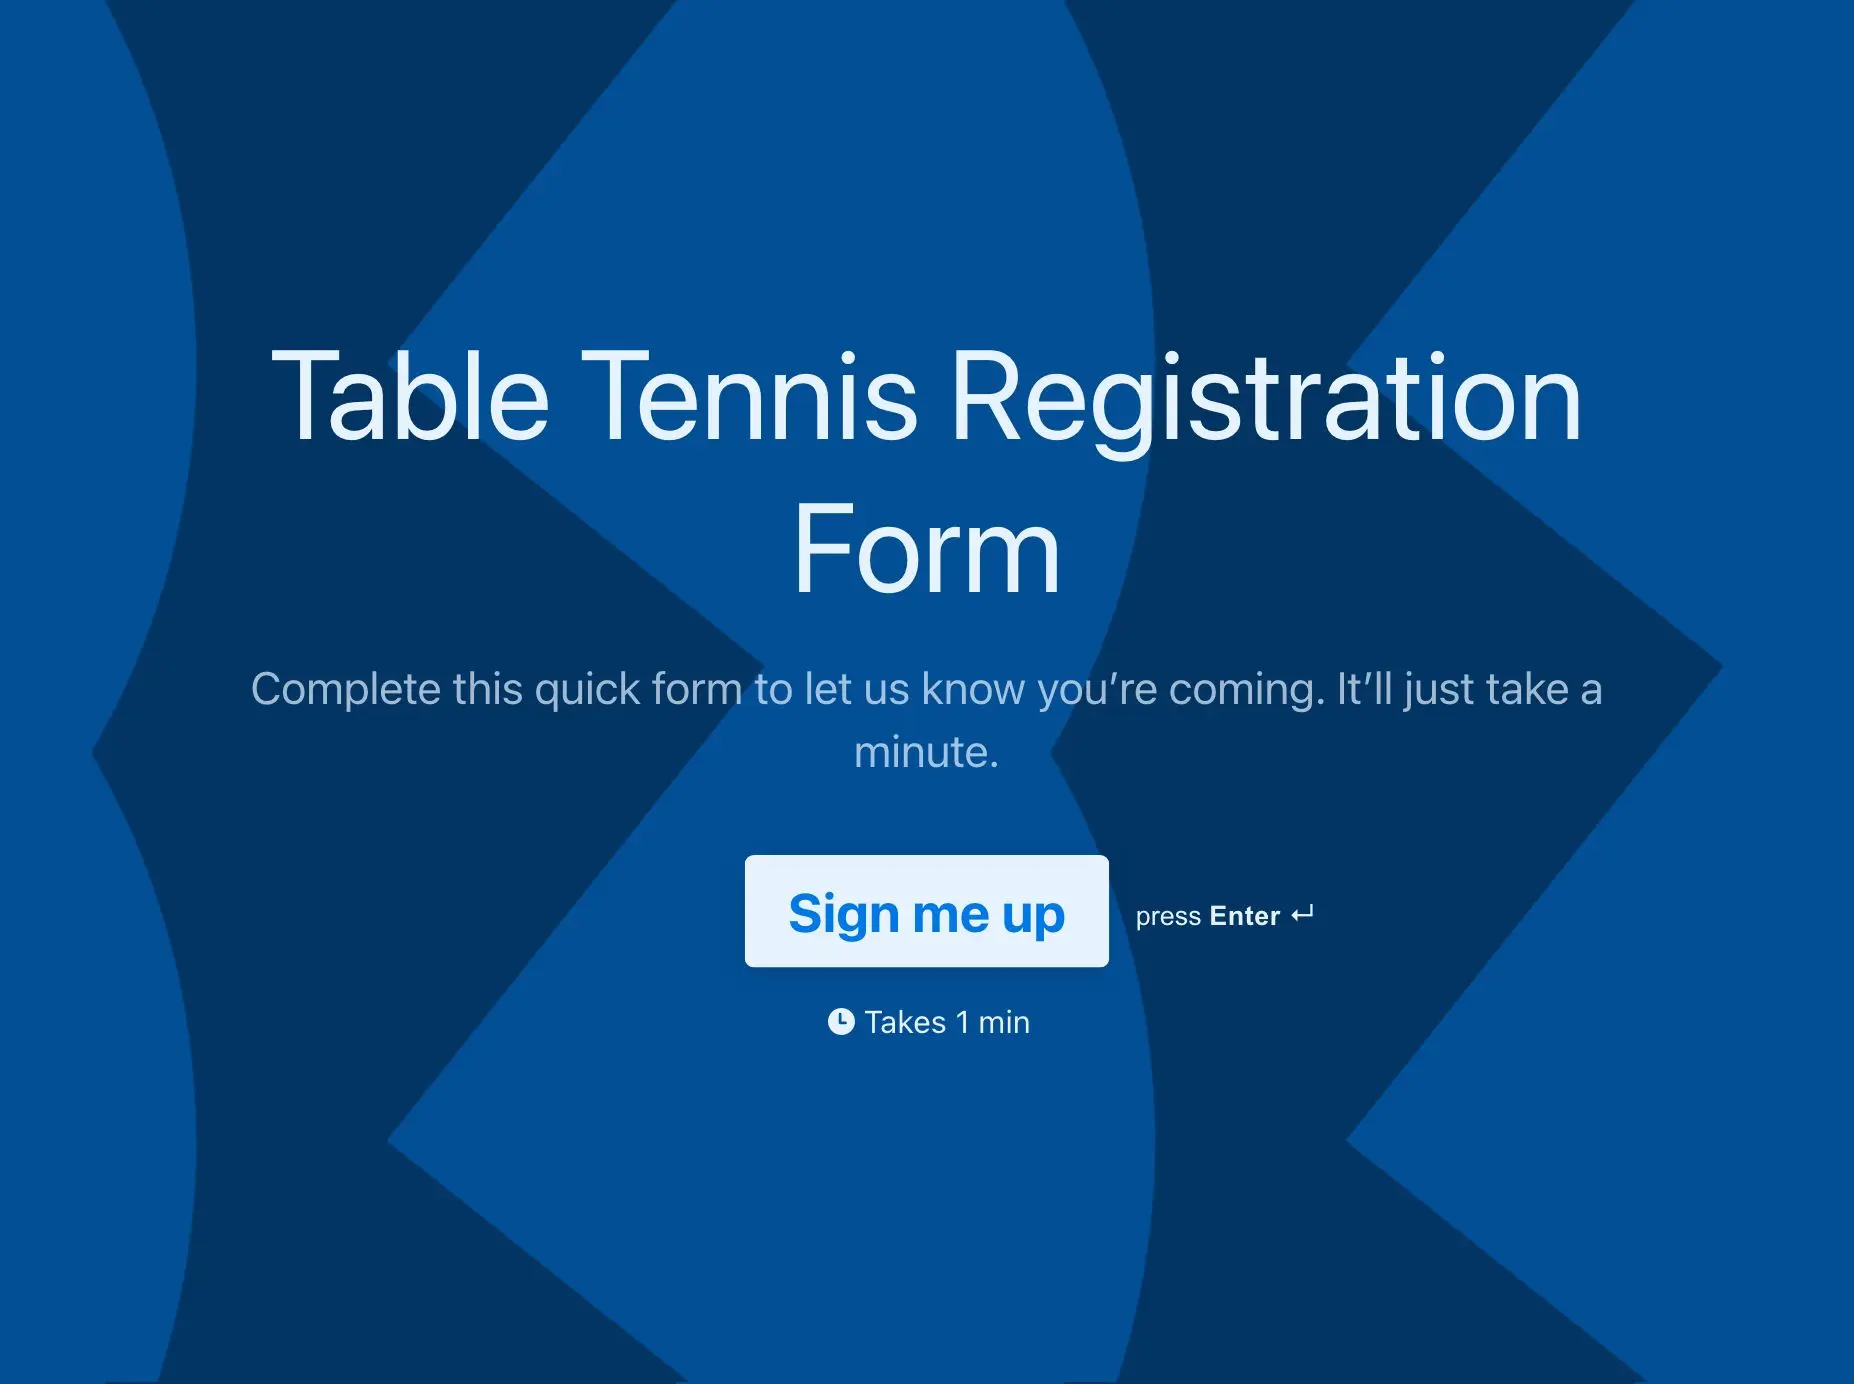 Table Tennis Registration Form Template Hero